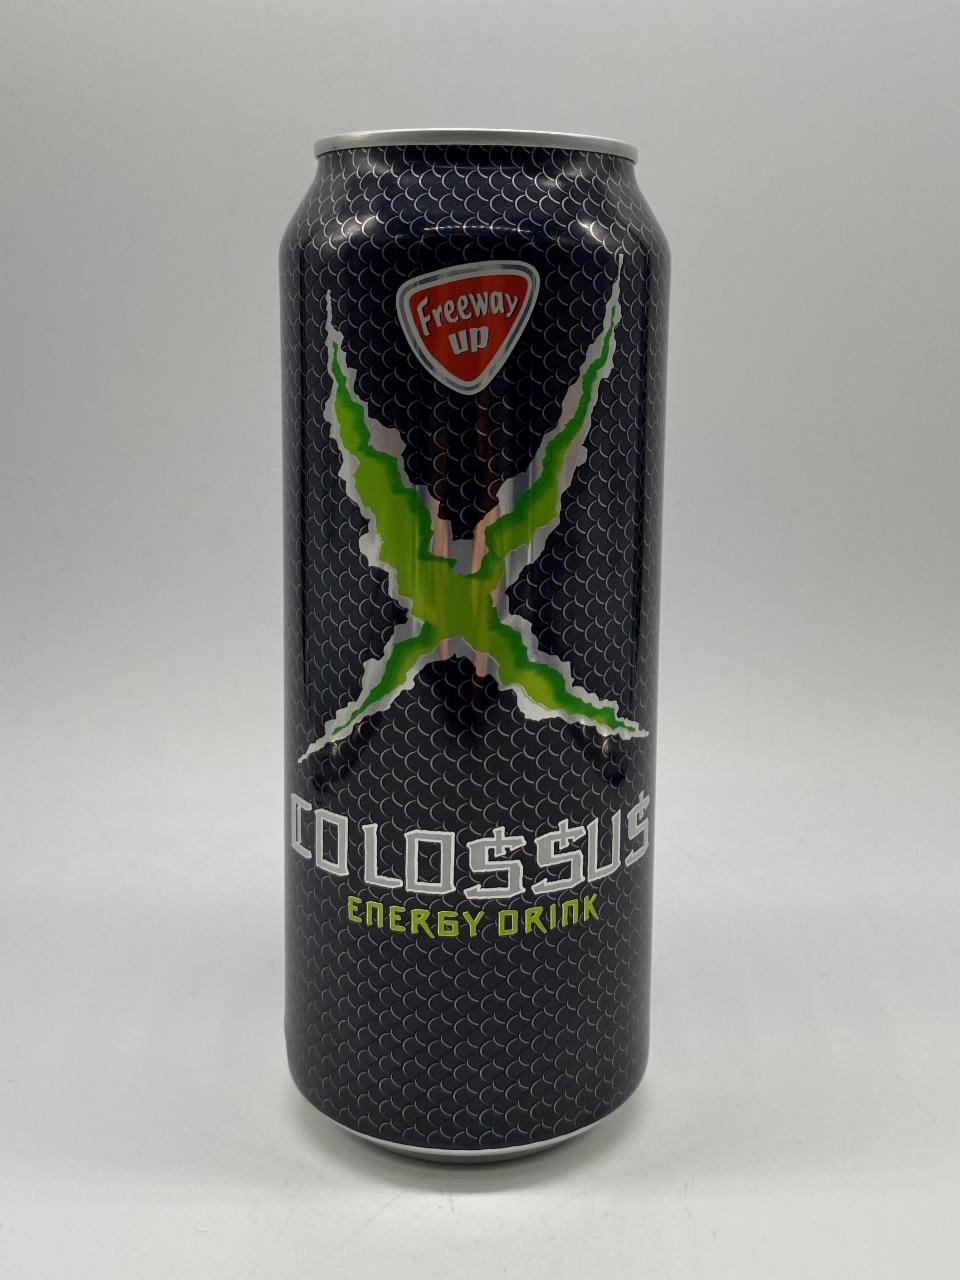 Fotografie - Colossus energy drink